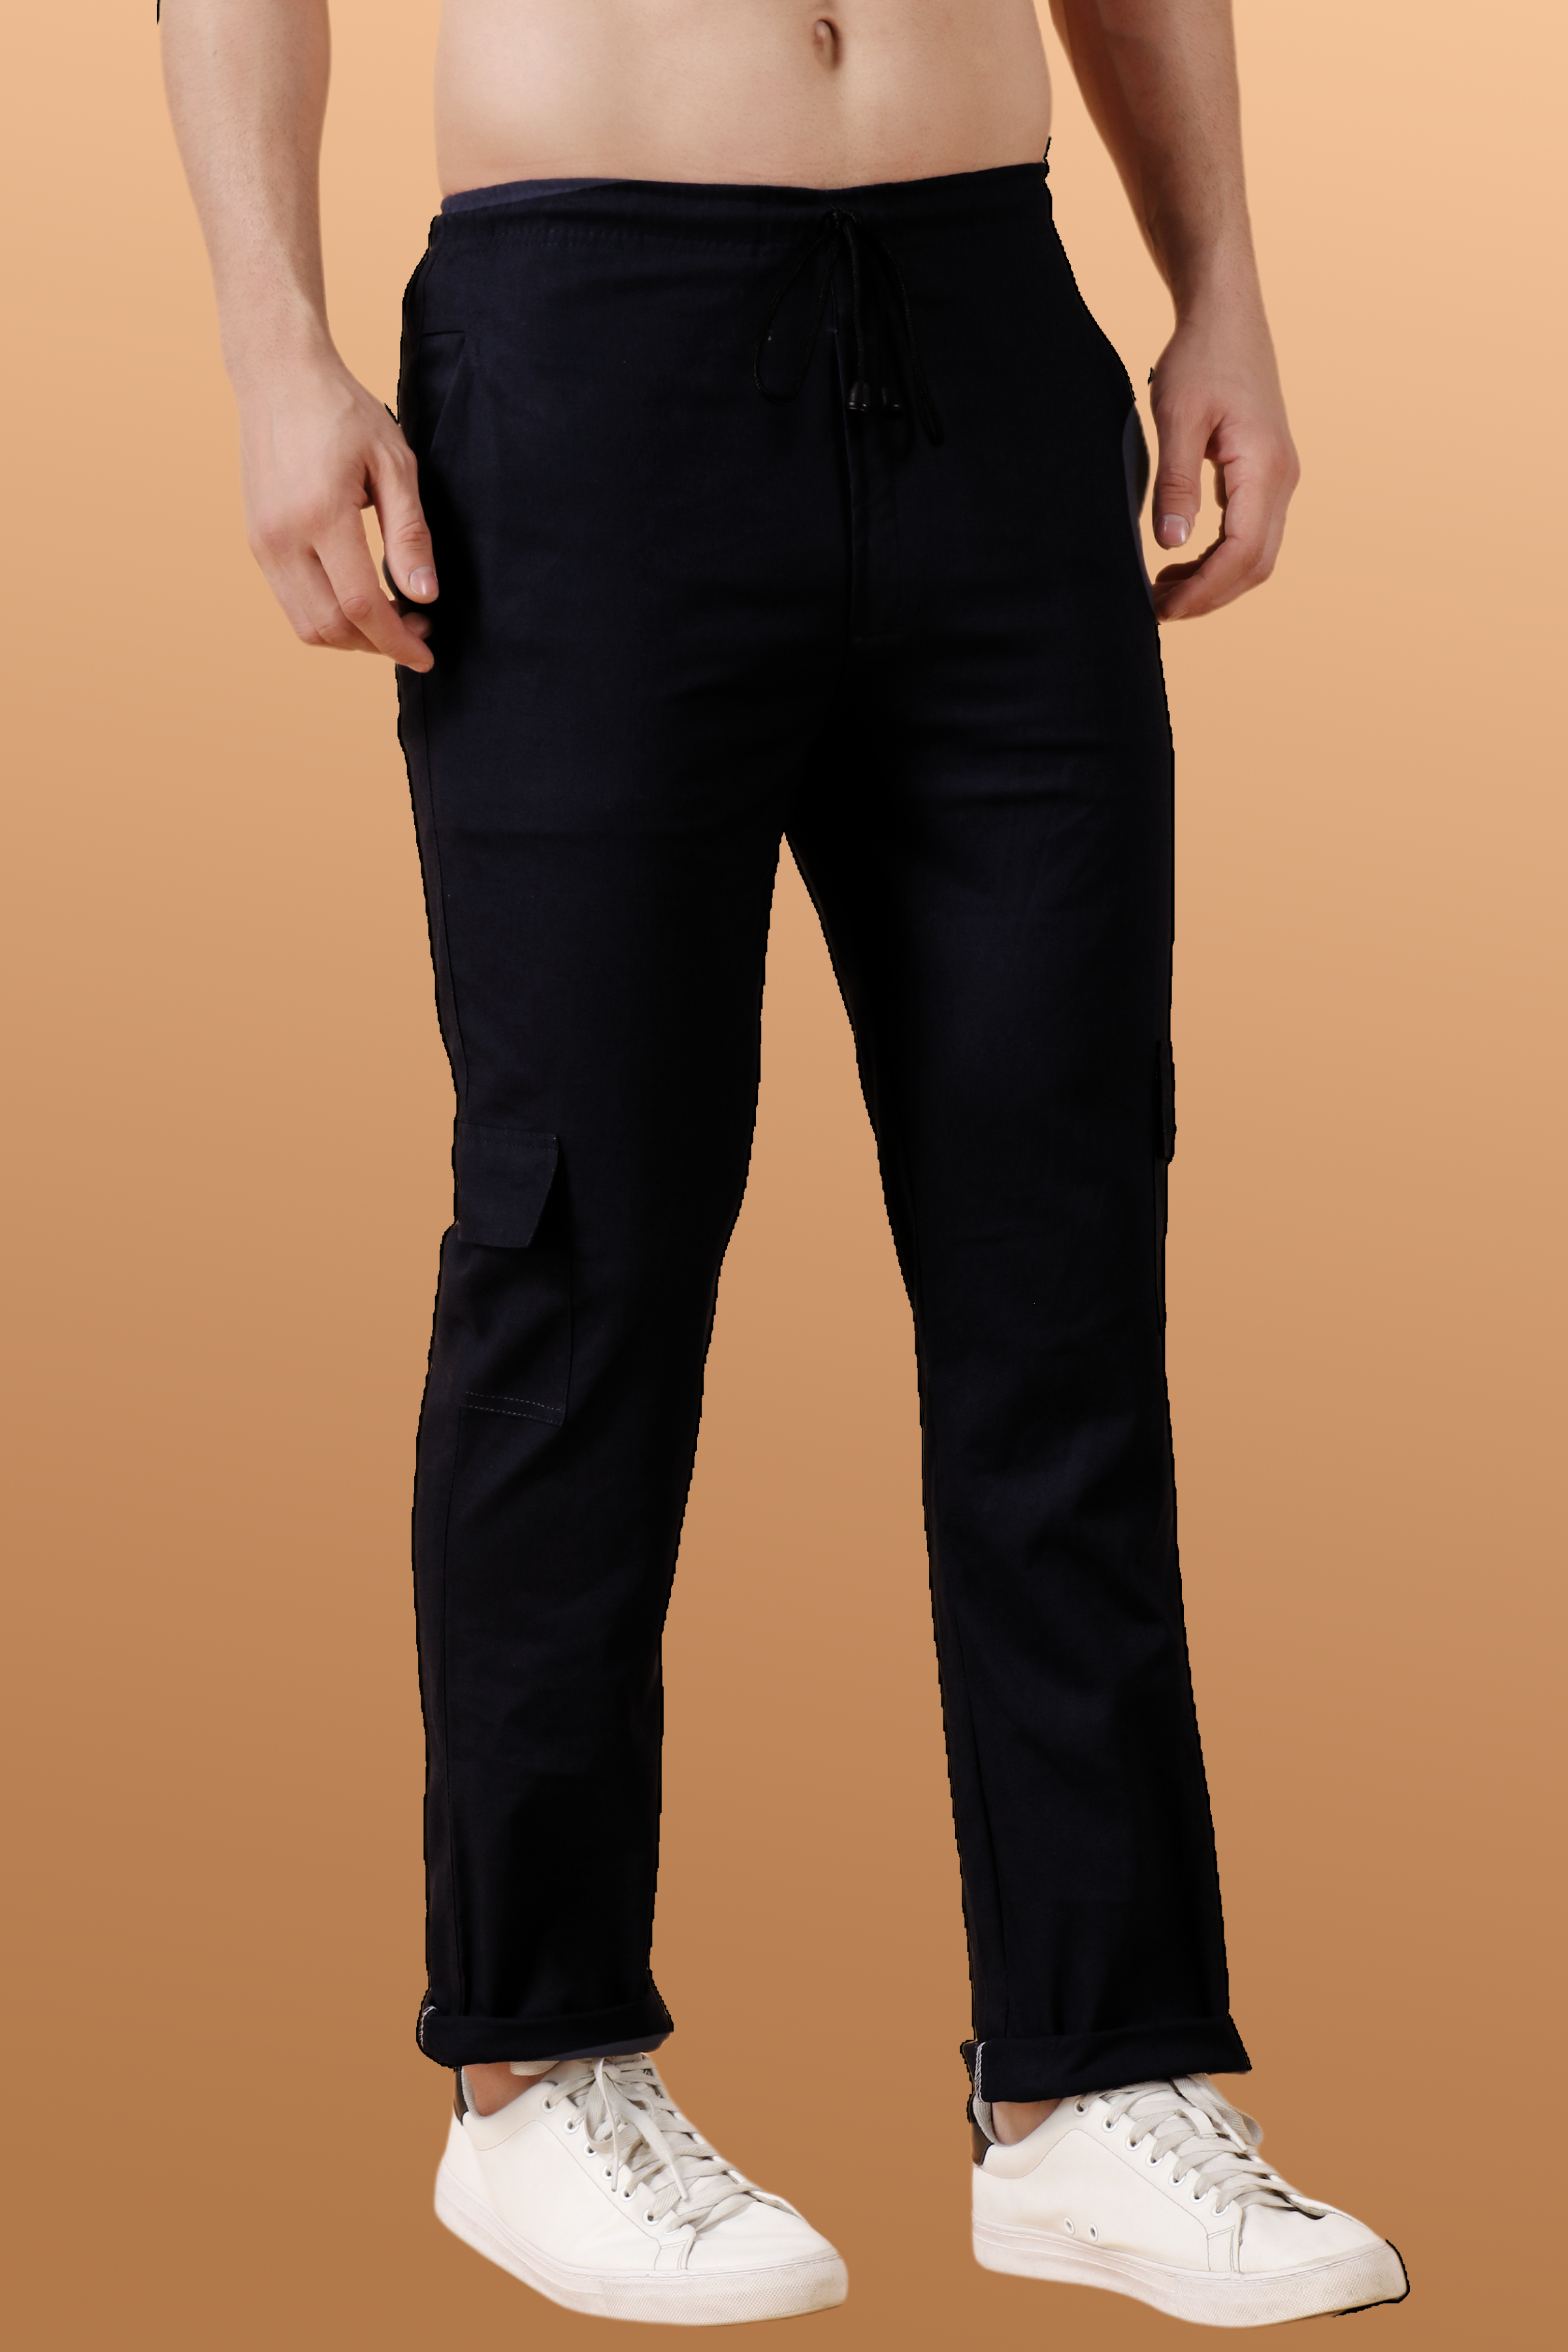 Buy Stretchable Plus Size Cargo Pants  Black Cargo Pants  Apella